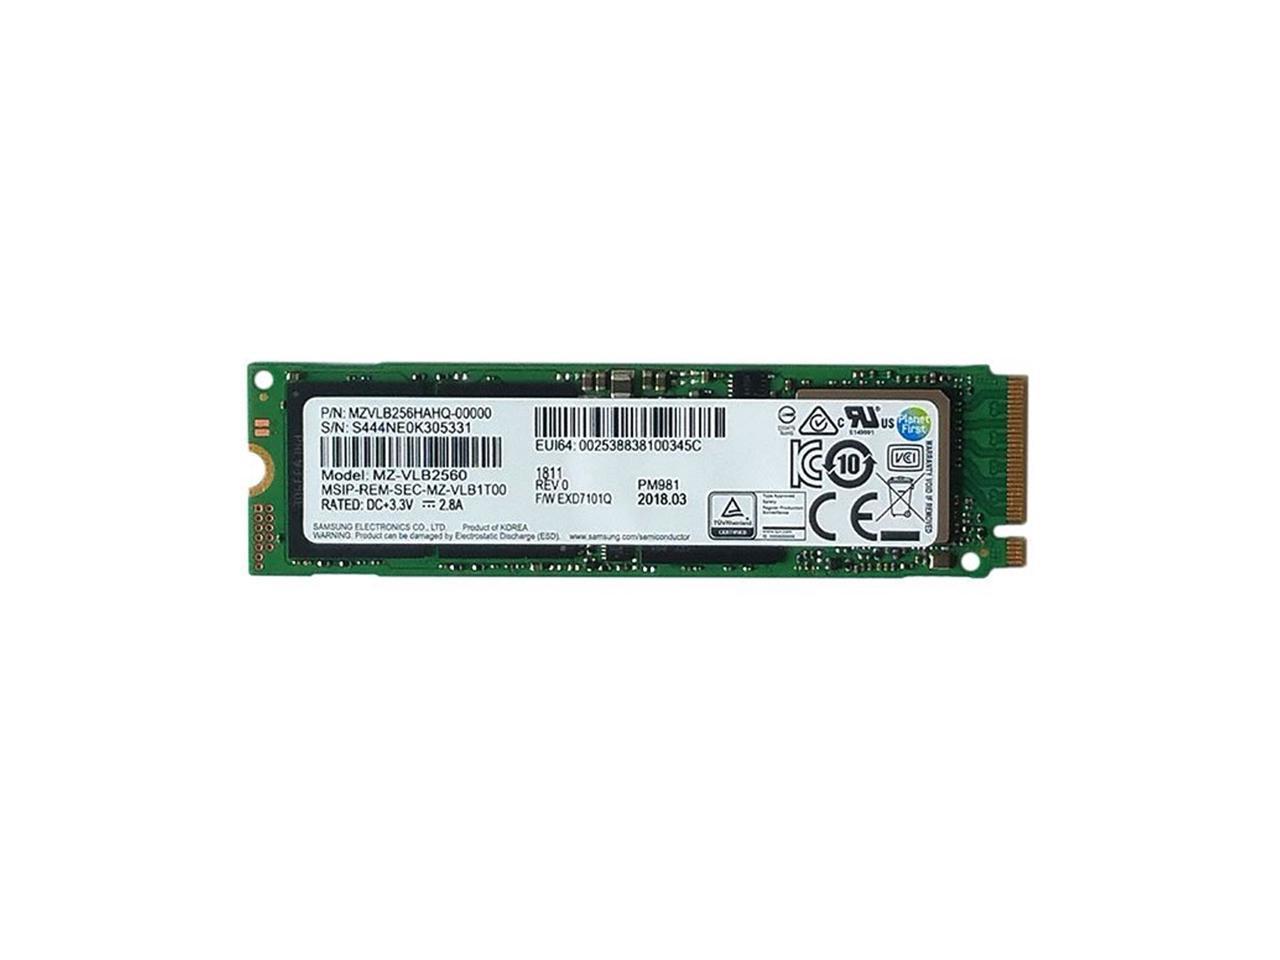 NEW Samsung PM981 MZ-VLB2560 256GB 3D TLC PCIe NVMe SSD,m2 970 EVO 250GB OEM 